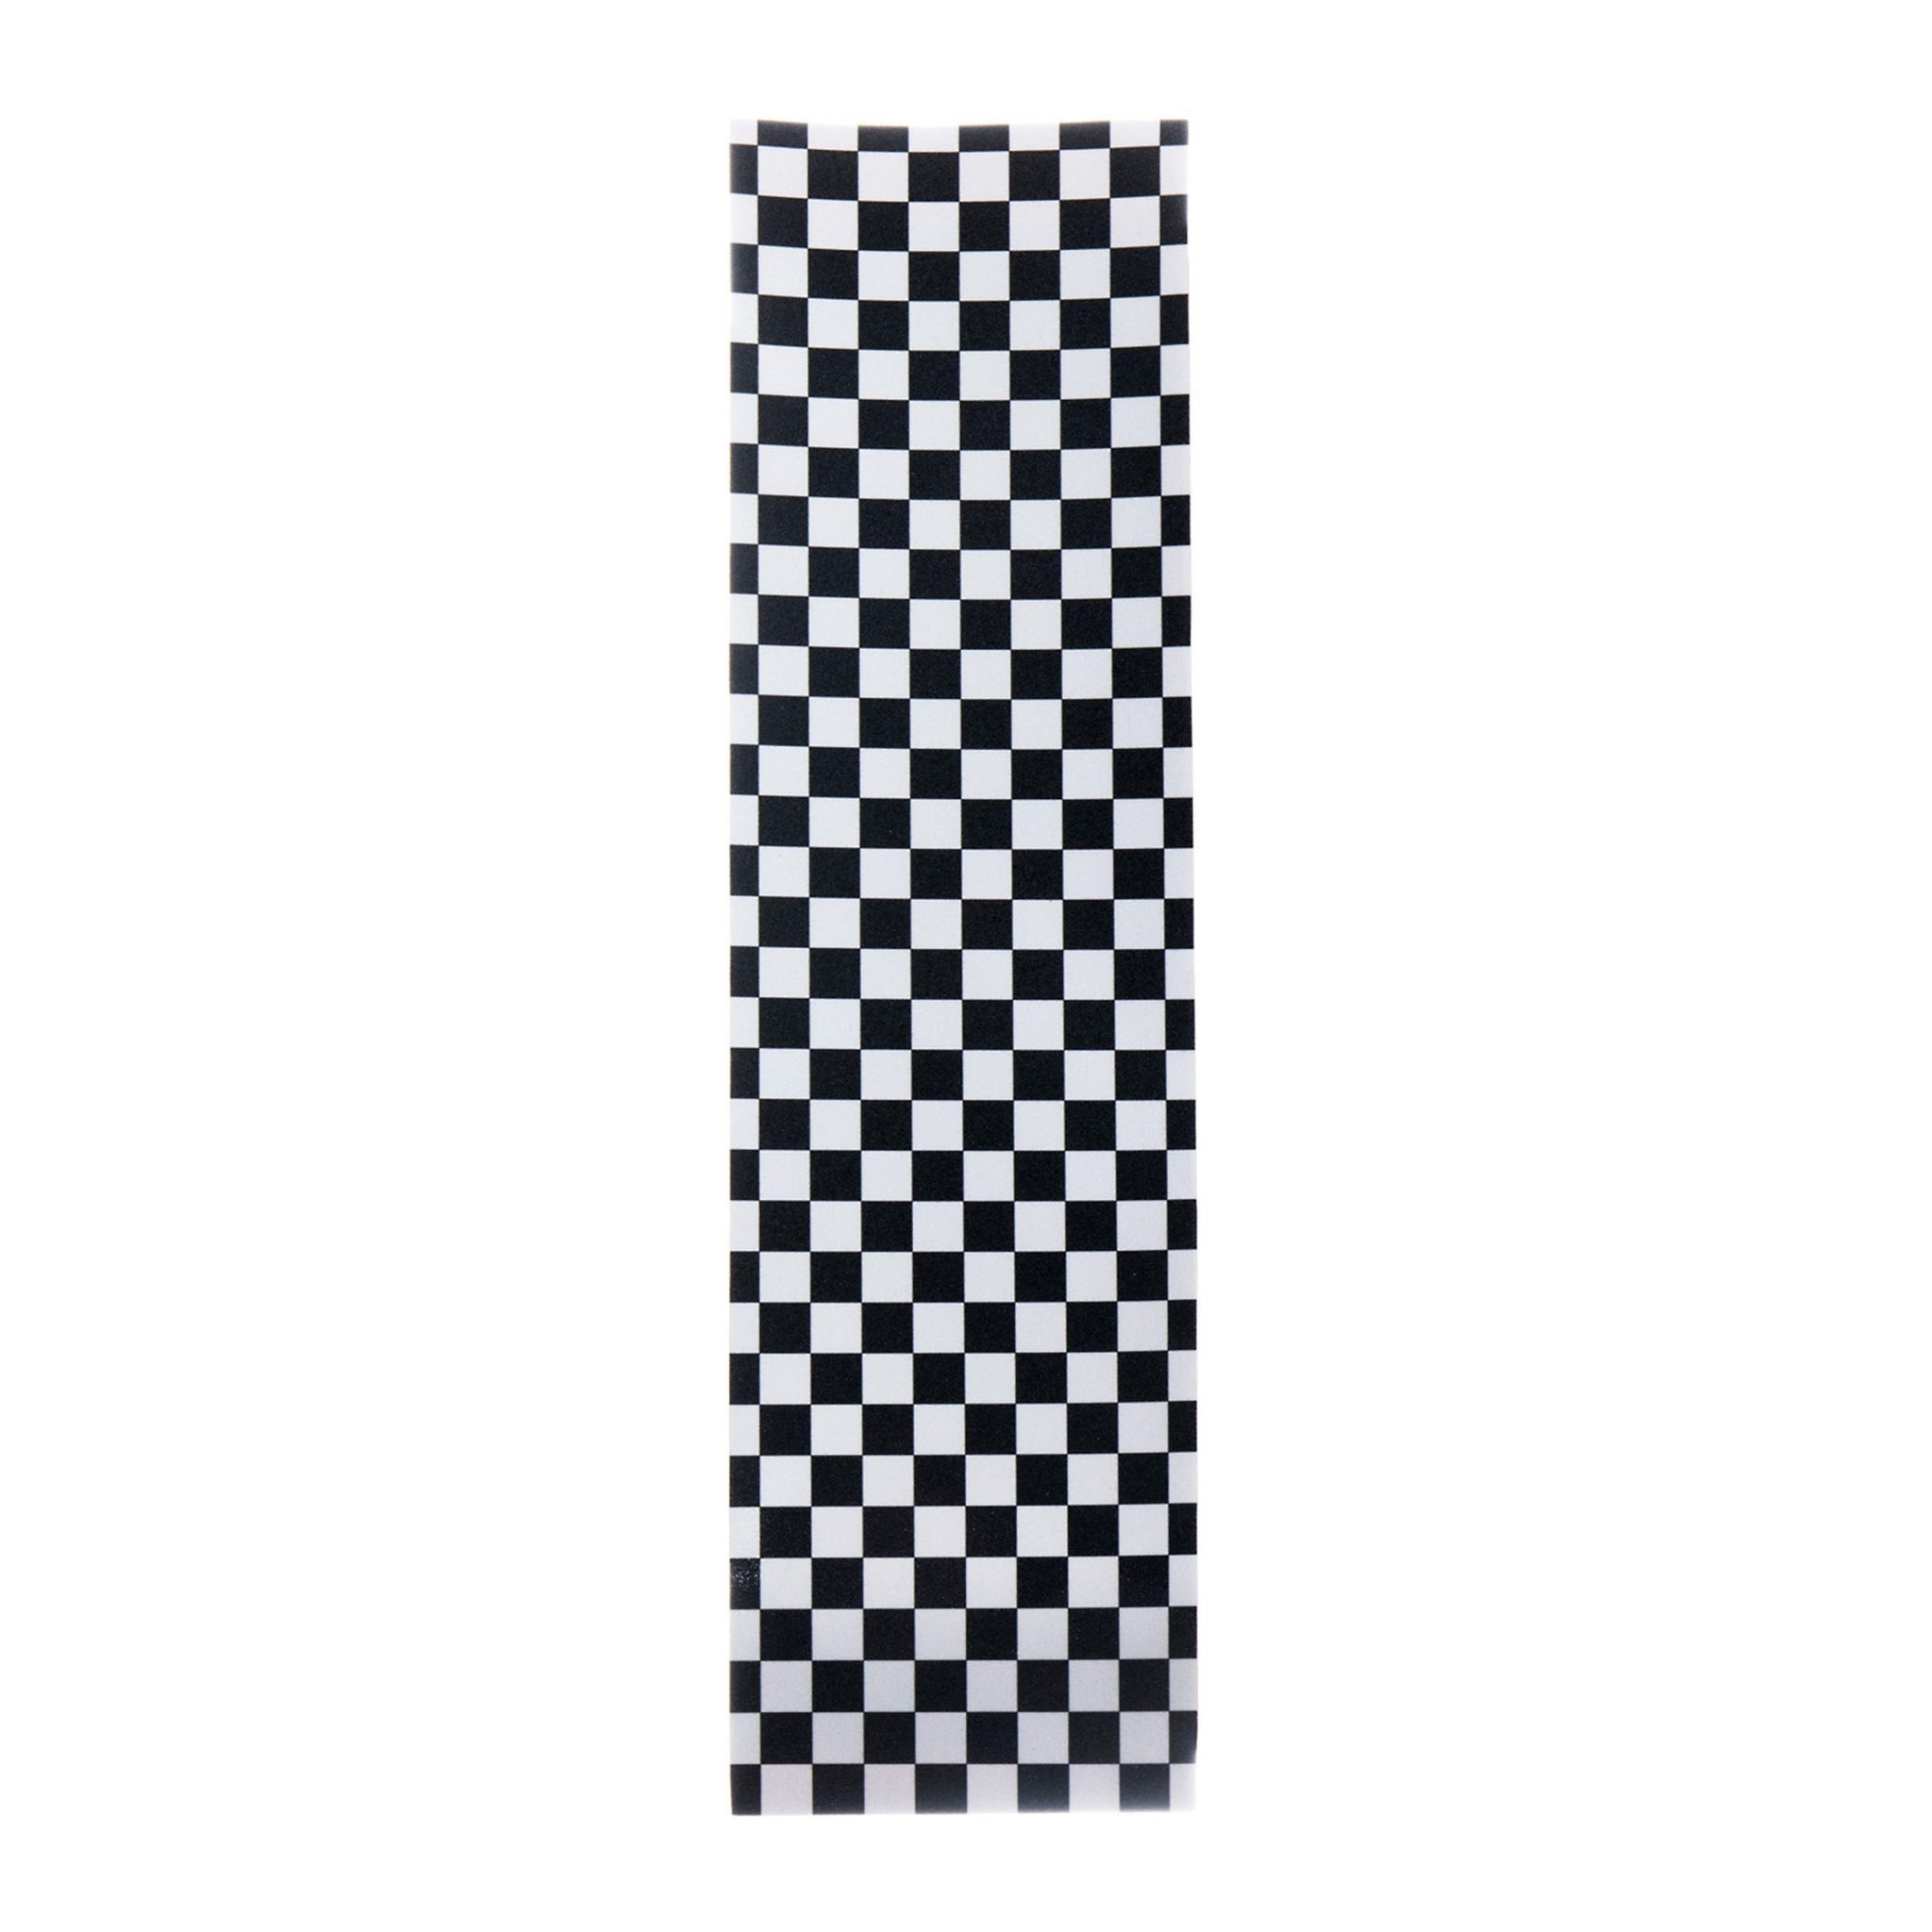  Skateboards Grip Tape Design 3D Black White Square